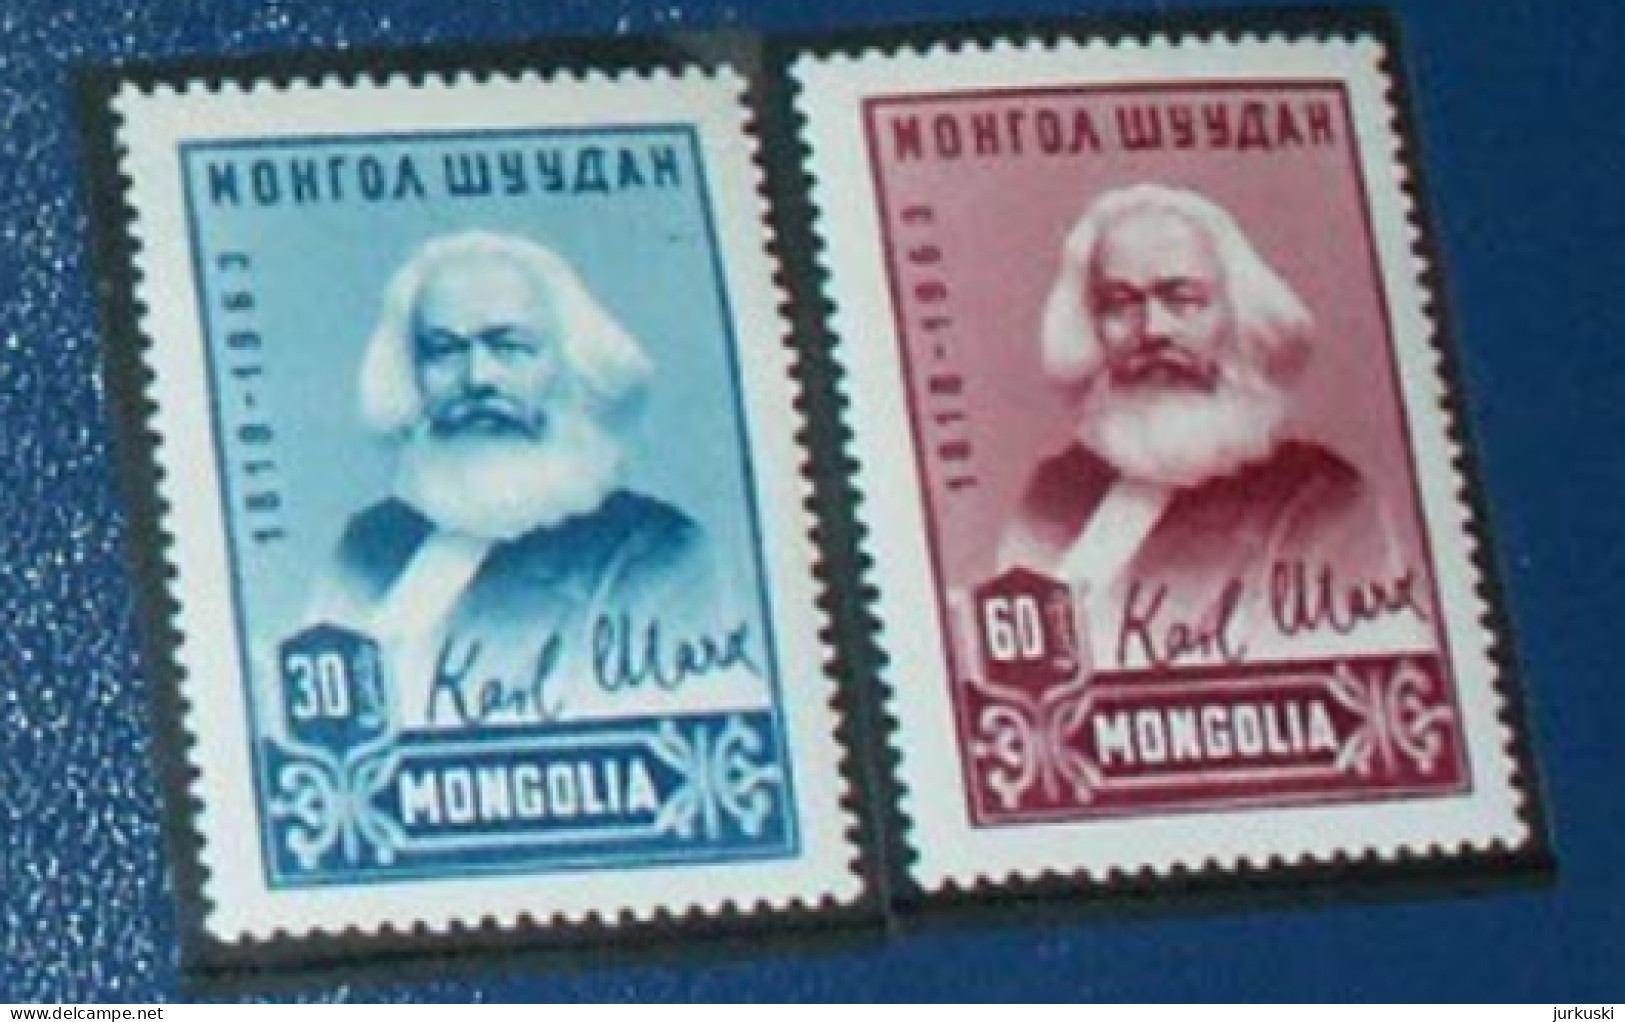 Mongolia 1963 - Karl Marx - MNH - Mongolia